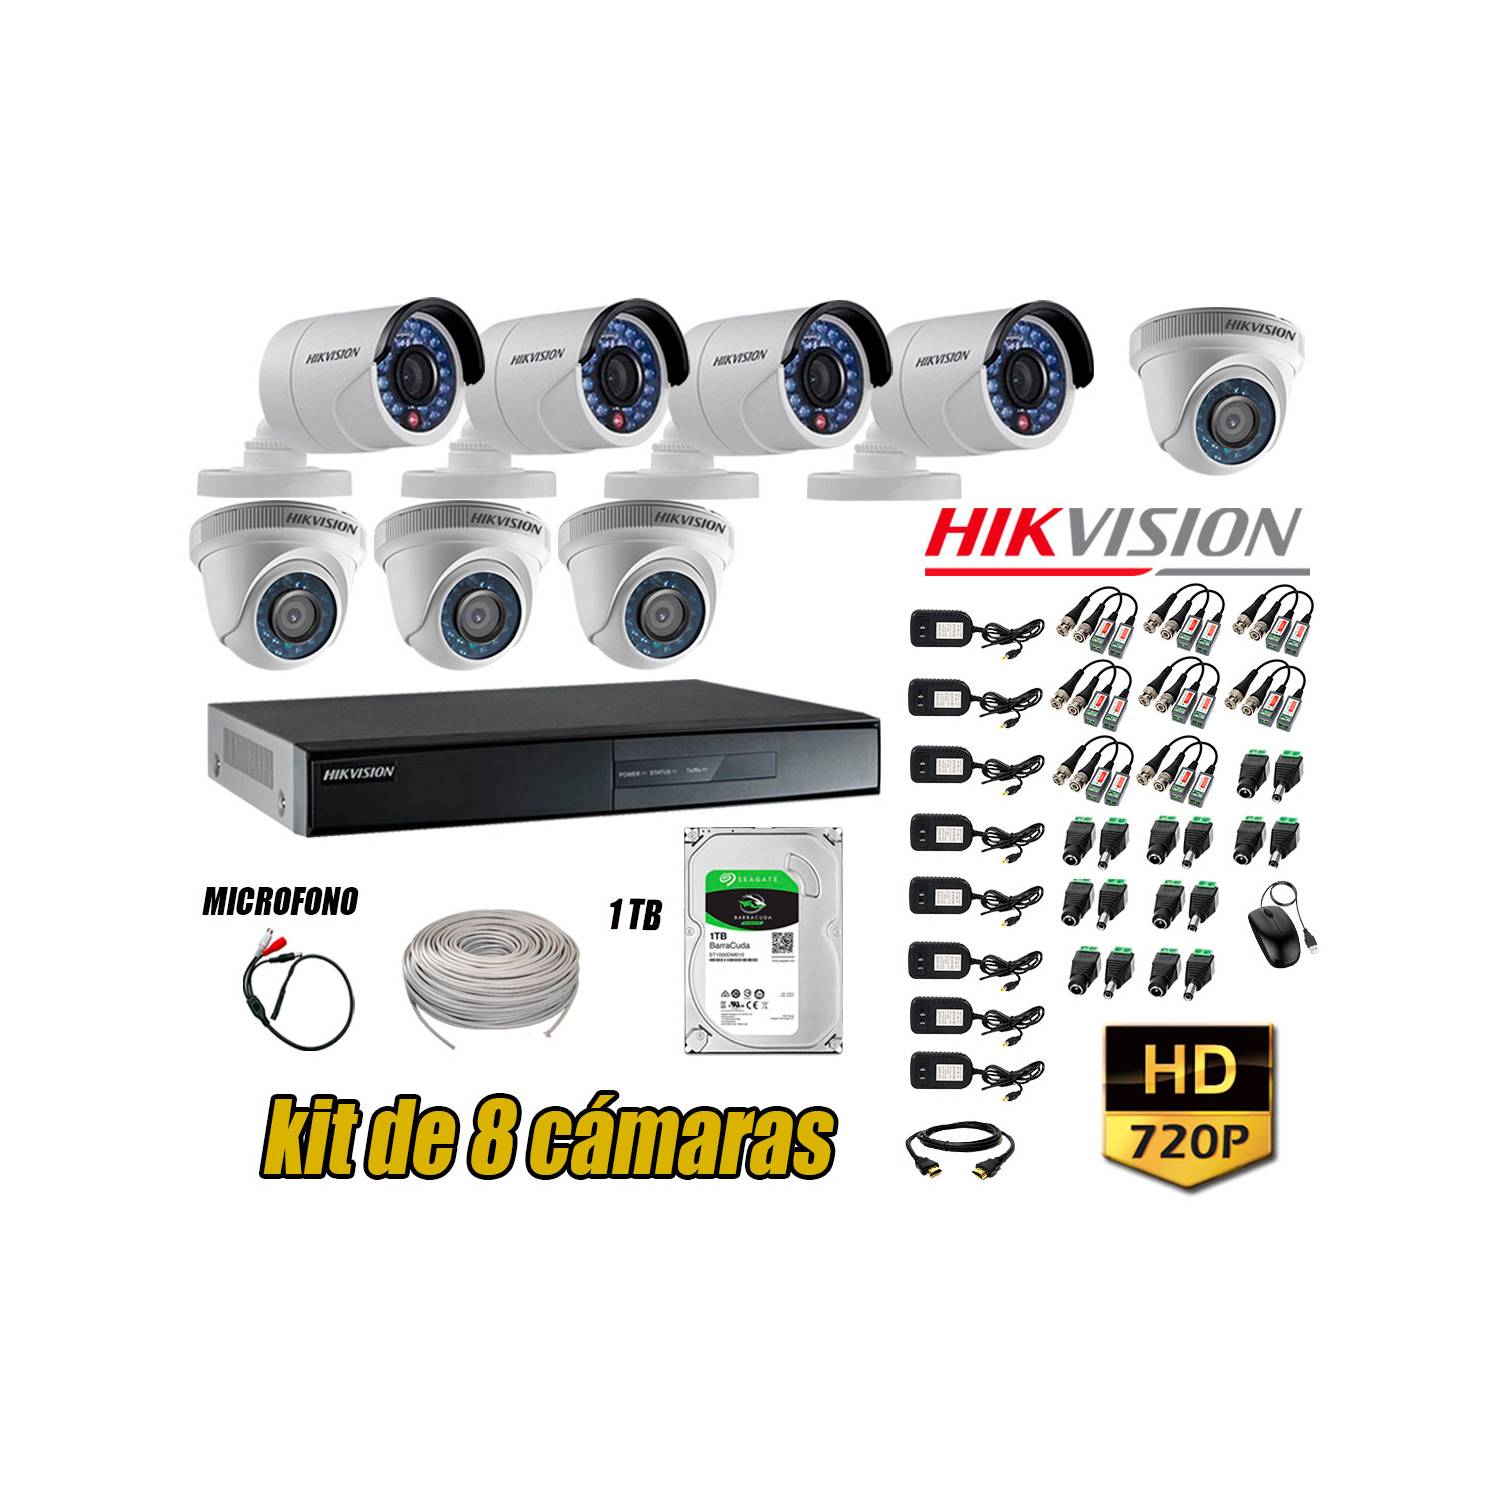 Kit 12 Cámaras de Vigilancia Hikvision Hd 720P Disco 1Tb P2p Kit